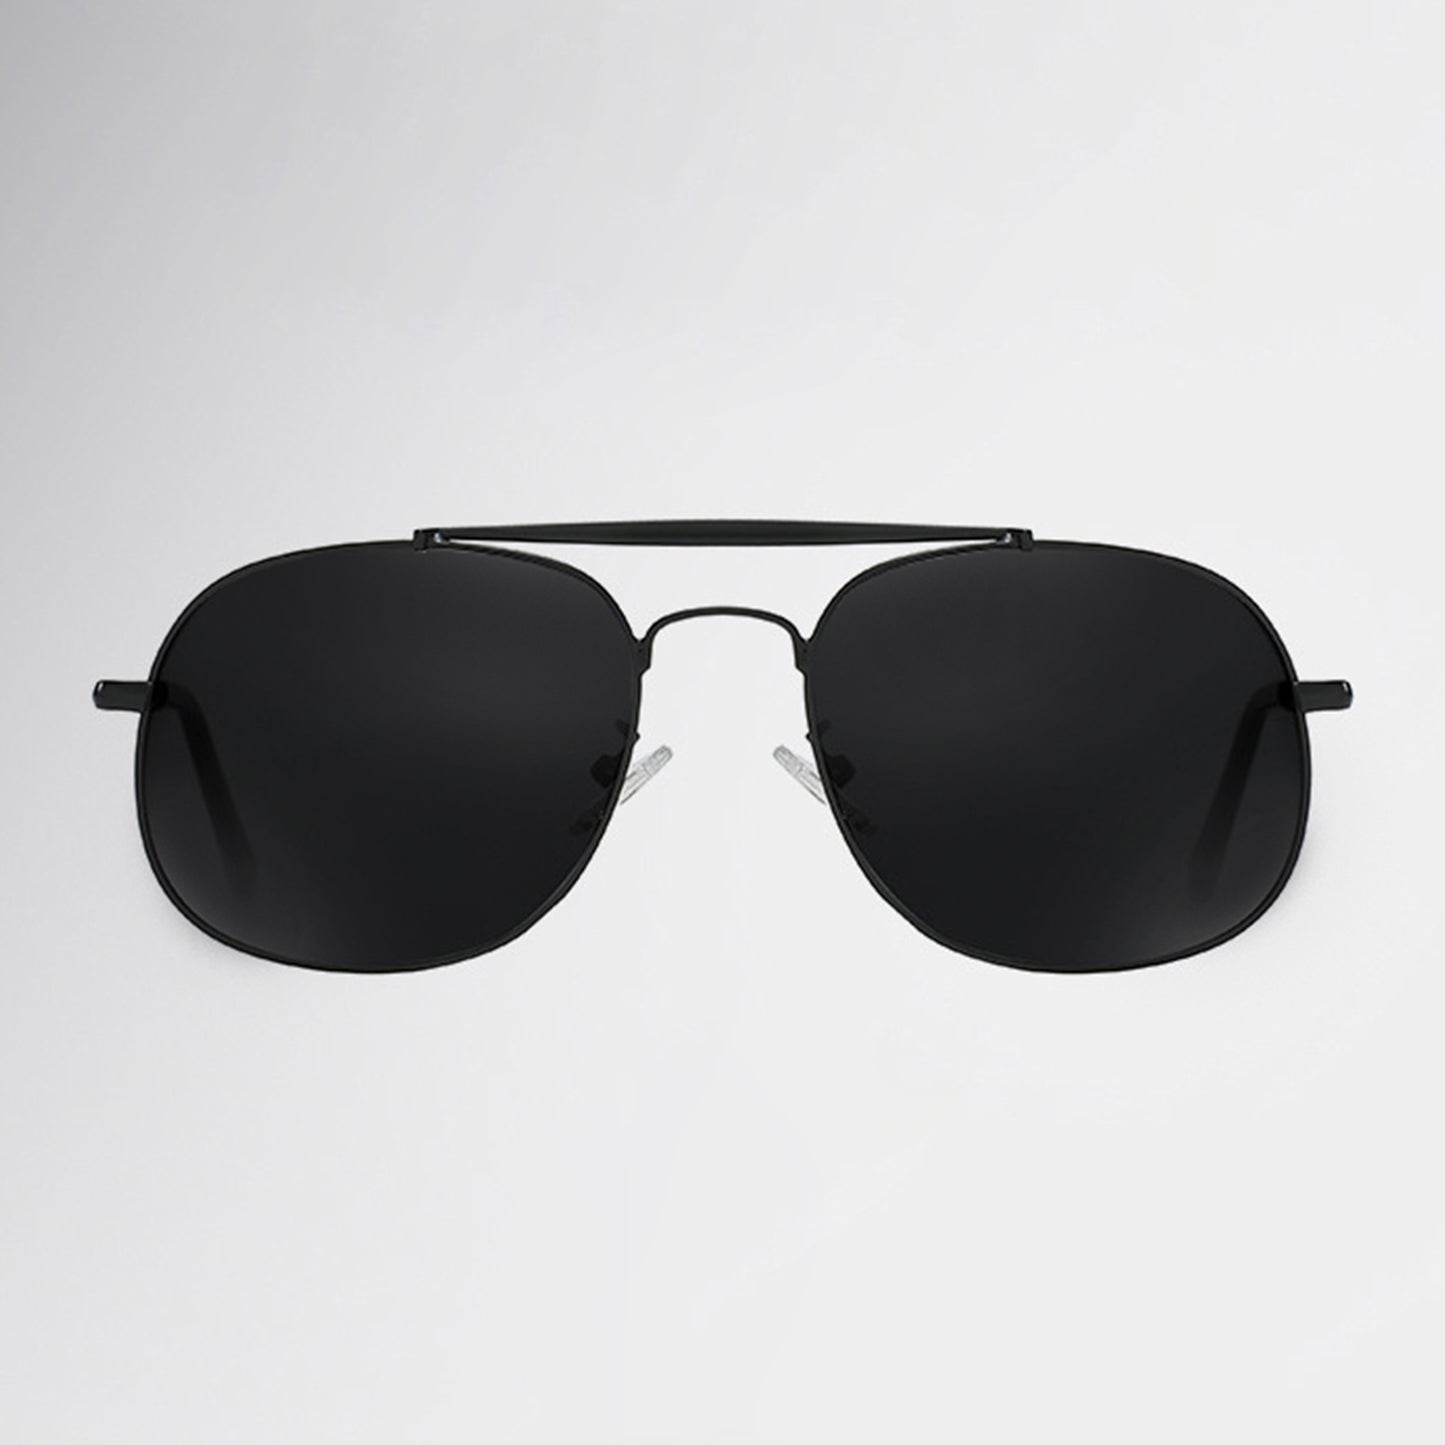 MS Black And Black Unisex Sunglasses